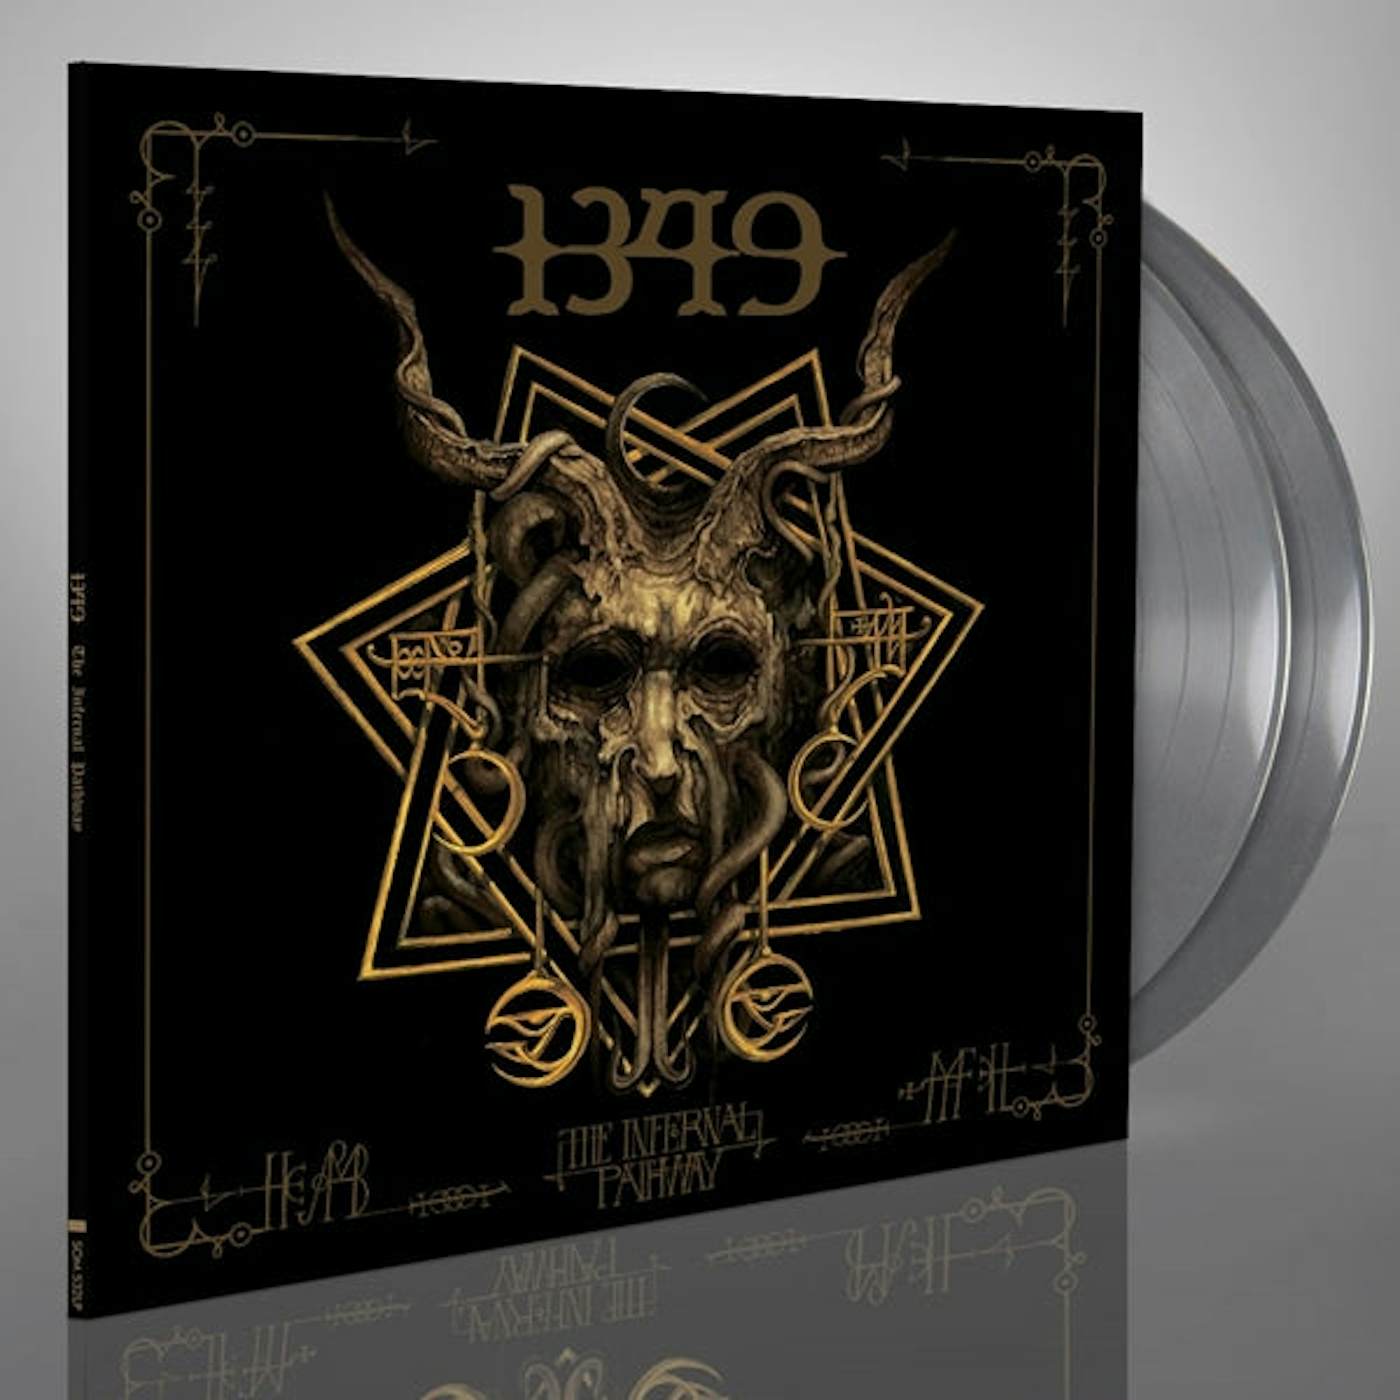 1349 LP - The Infernal Pathway (Silver Vinyl)